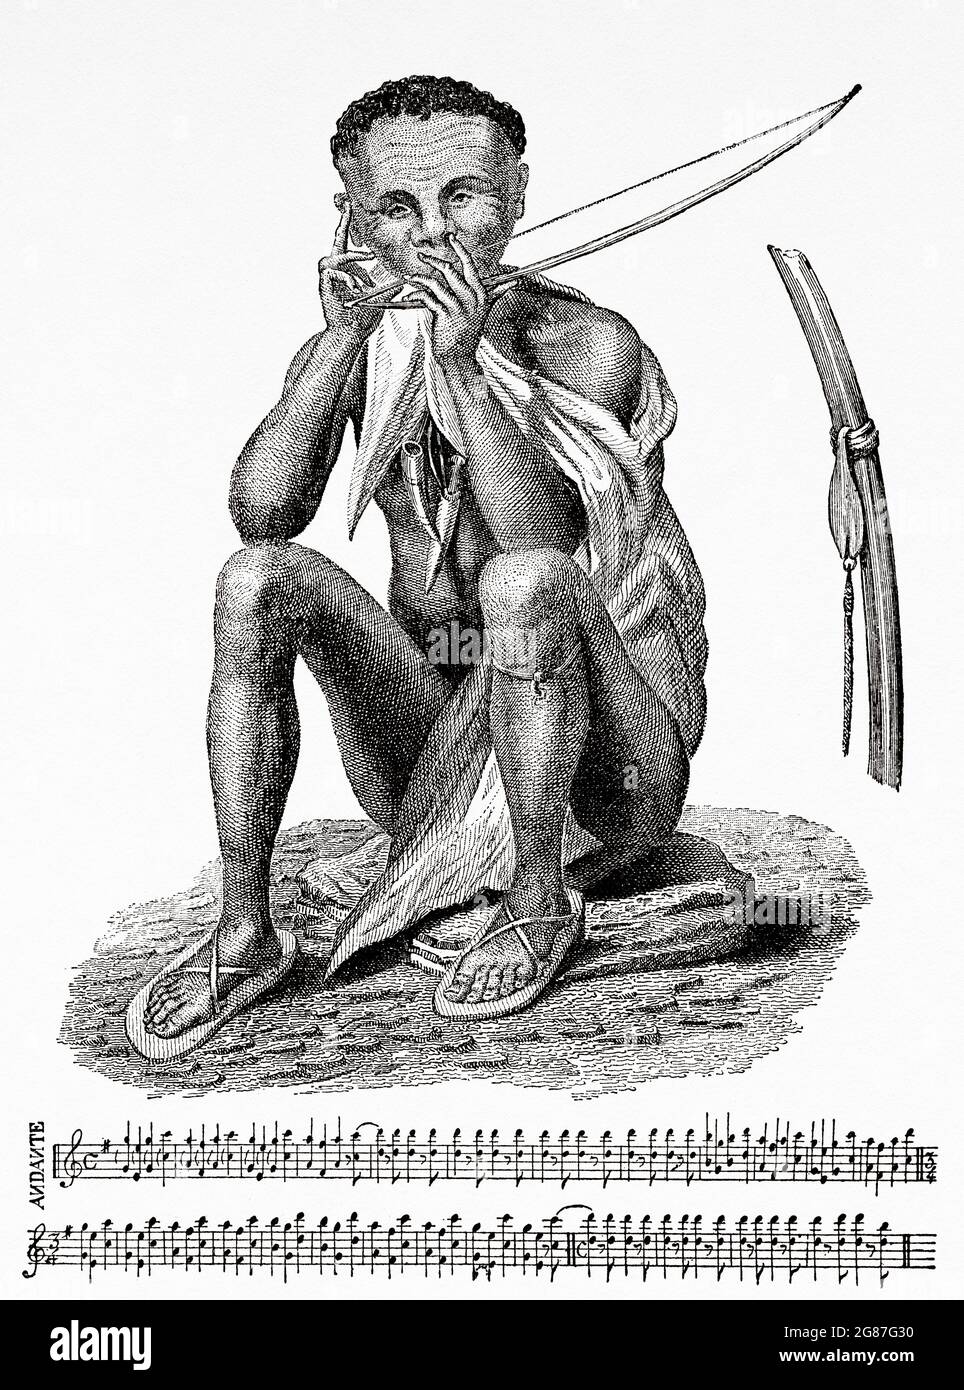 San or Bushman man playing a gorah (musical bow) southern Africa. Old 19th century engraved illustration from El Mundo Ilustrado 1880 Stock Photo